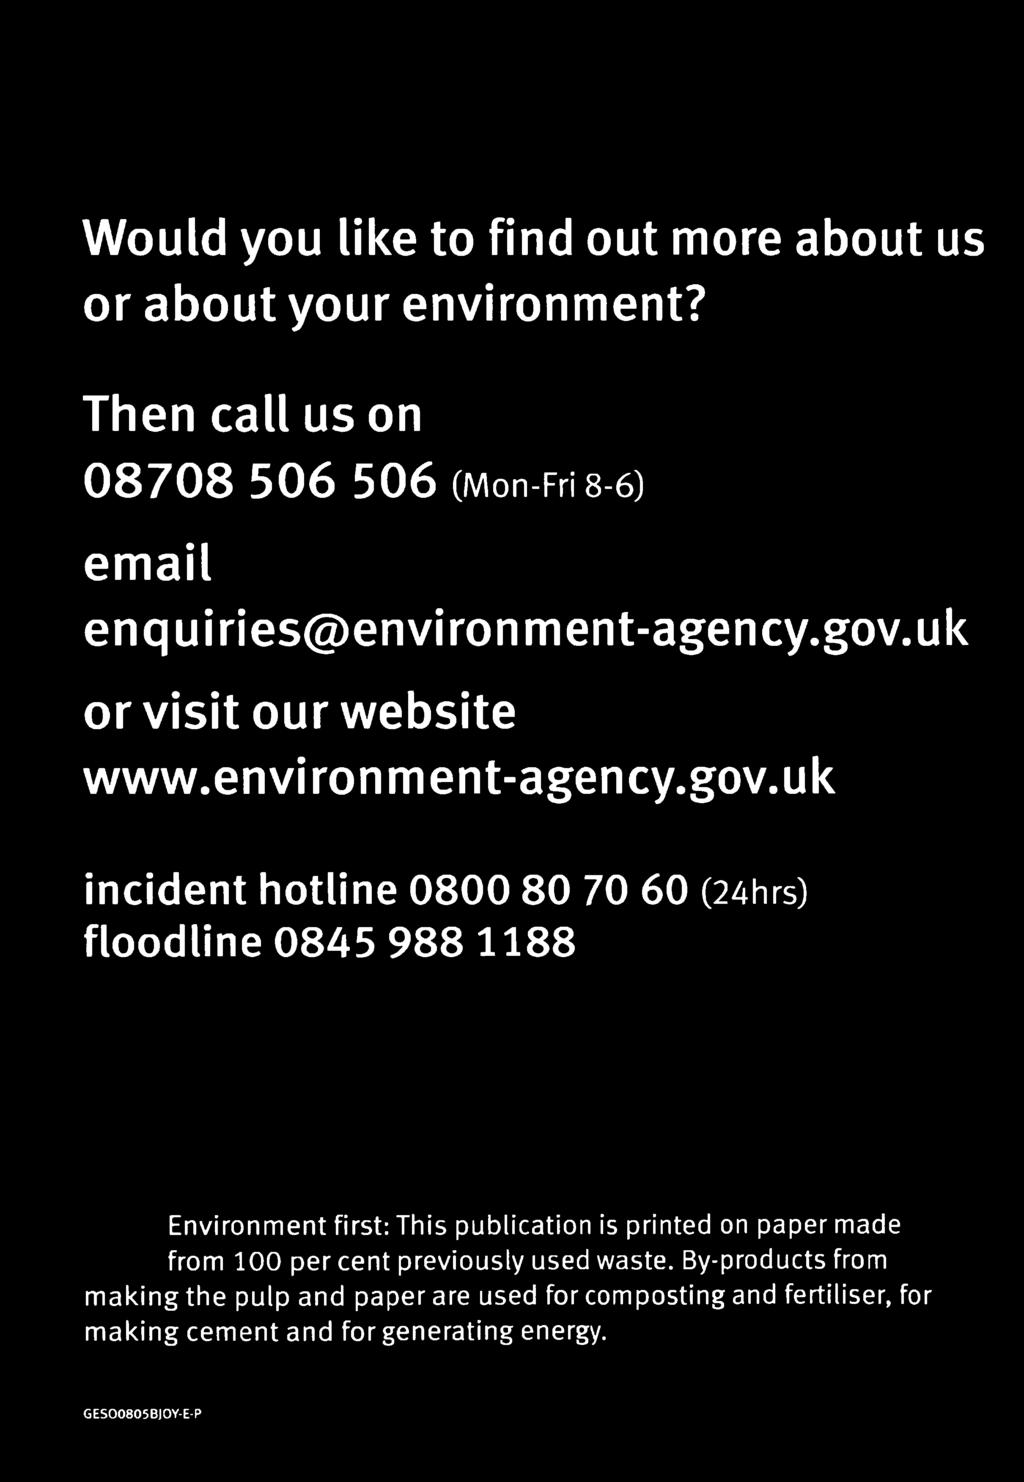 environment-agency.gov.